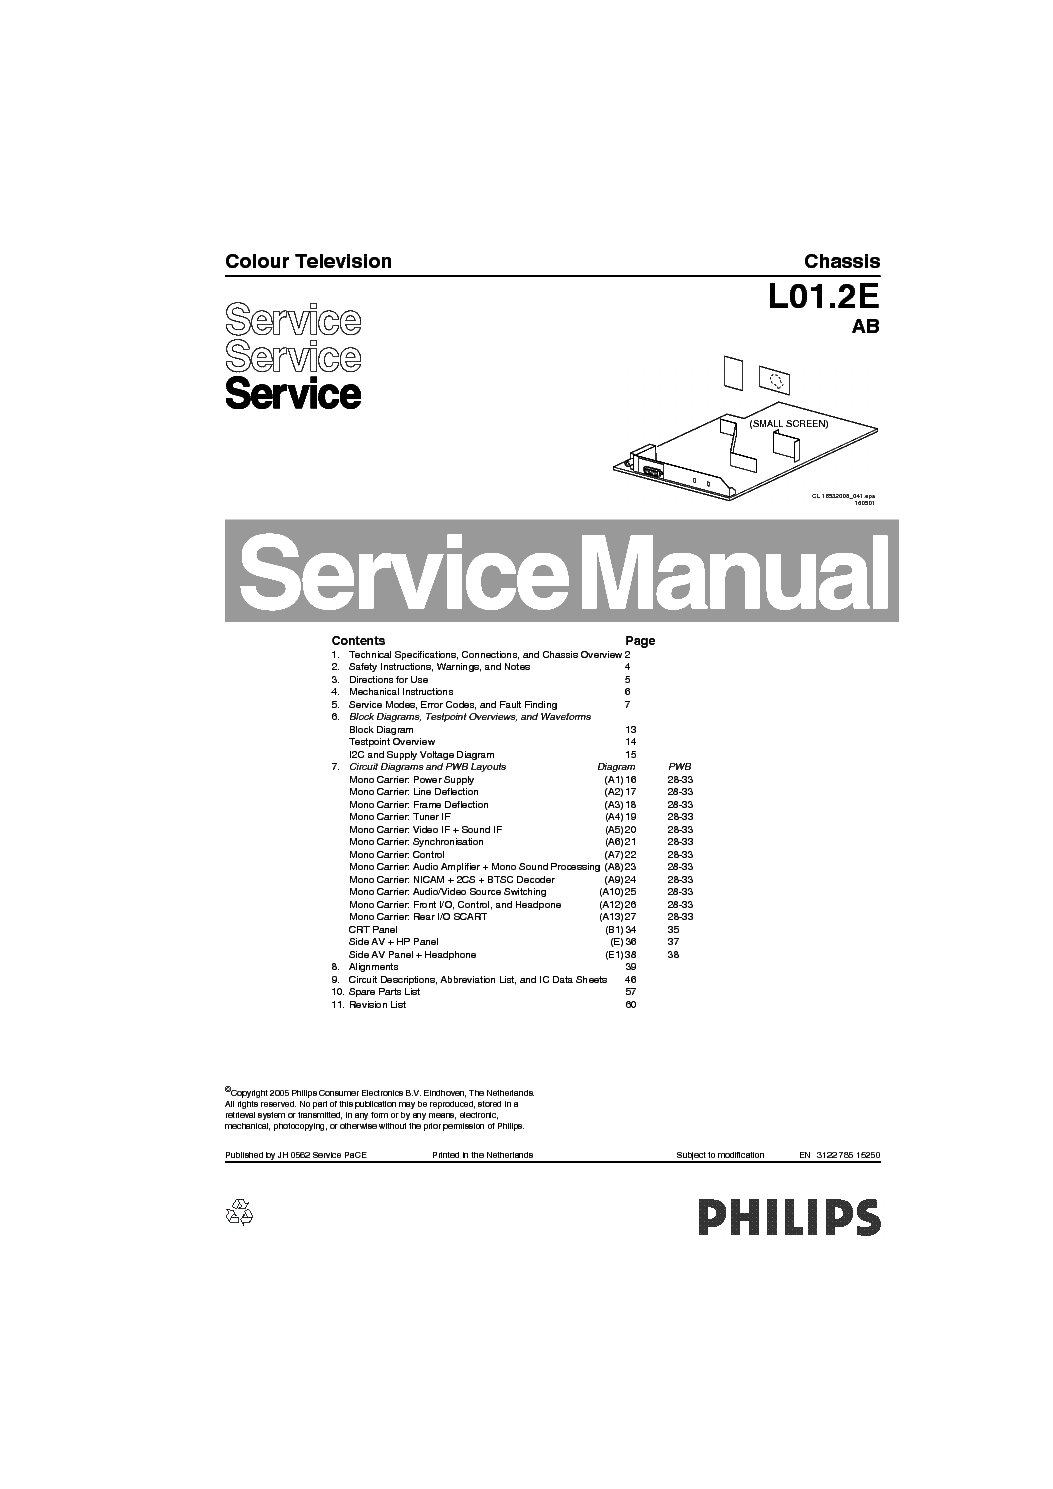 PHILIPS L01.2E-AB service manual (1st page)